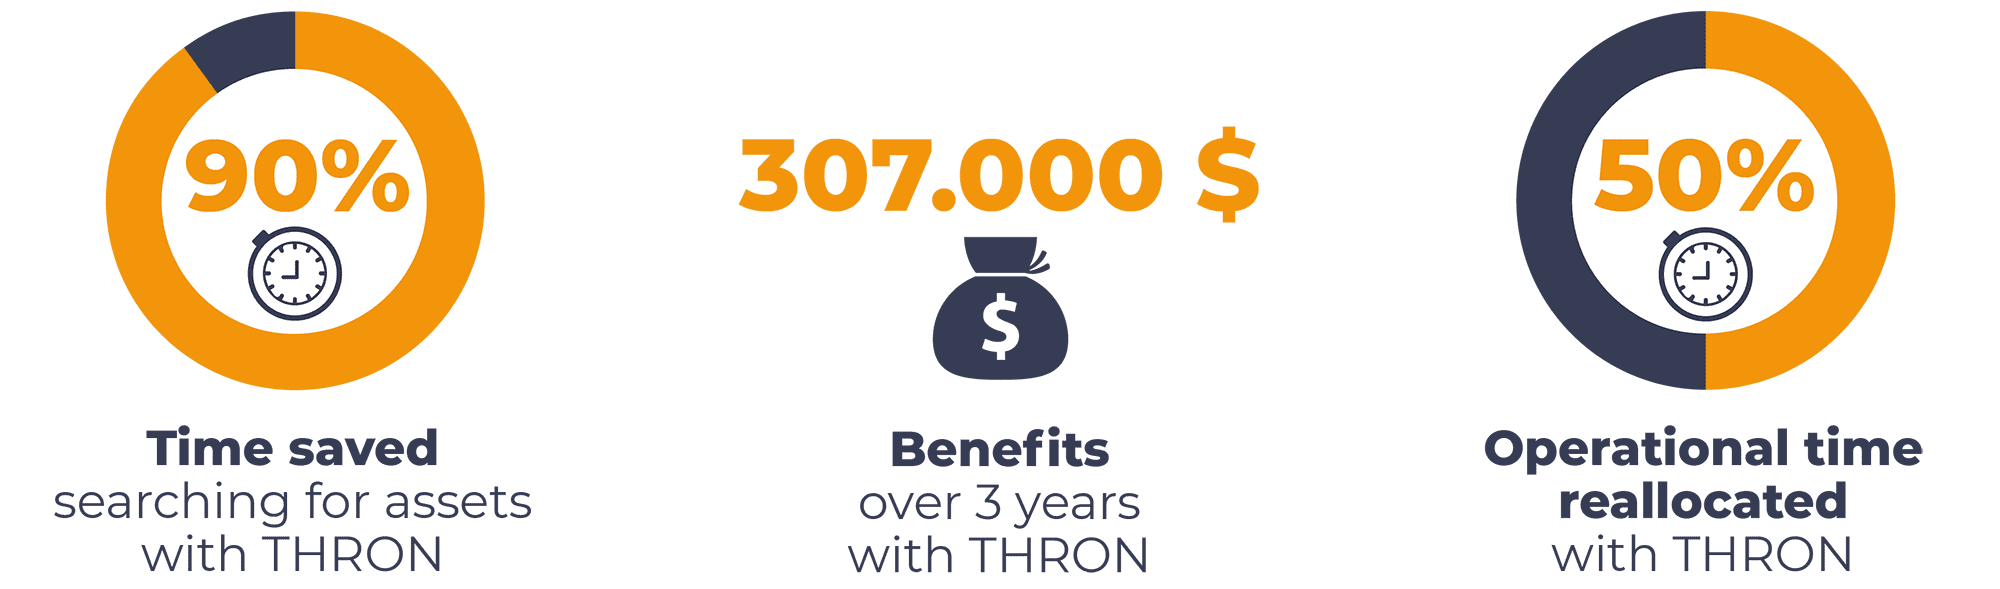 THRON benefits